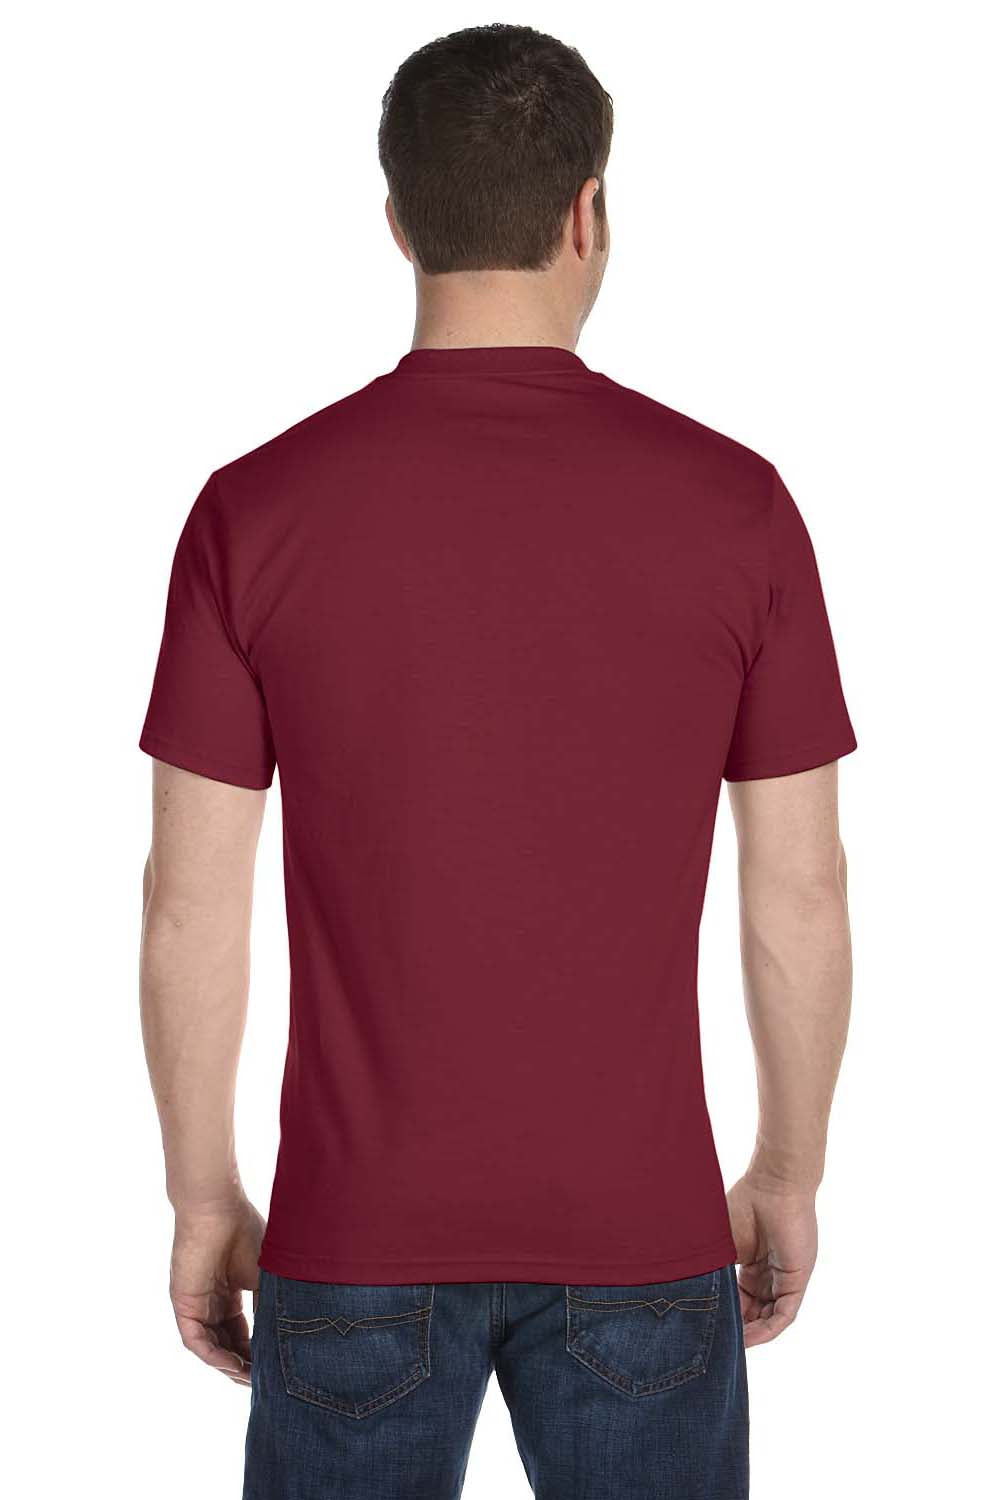 Hanes 5180 Mens Beefy-T Short Sleeve Crewneck T-Shirt Cardinal Red Back